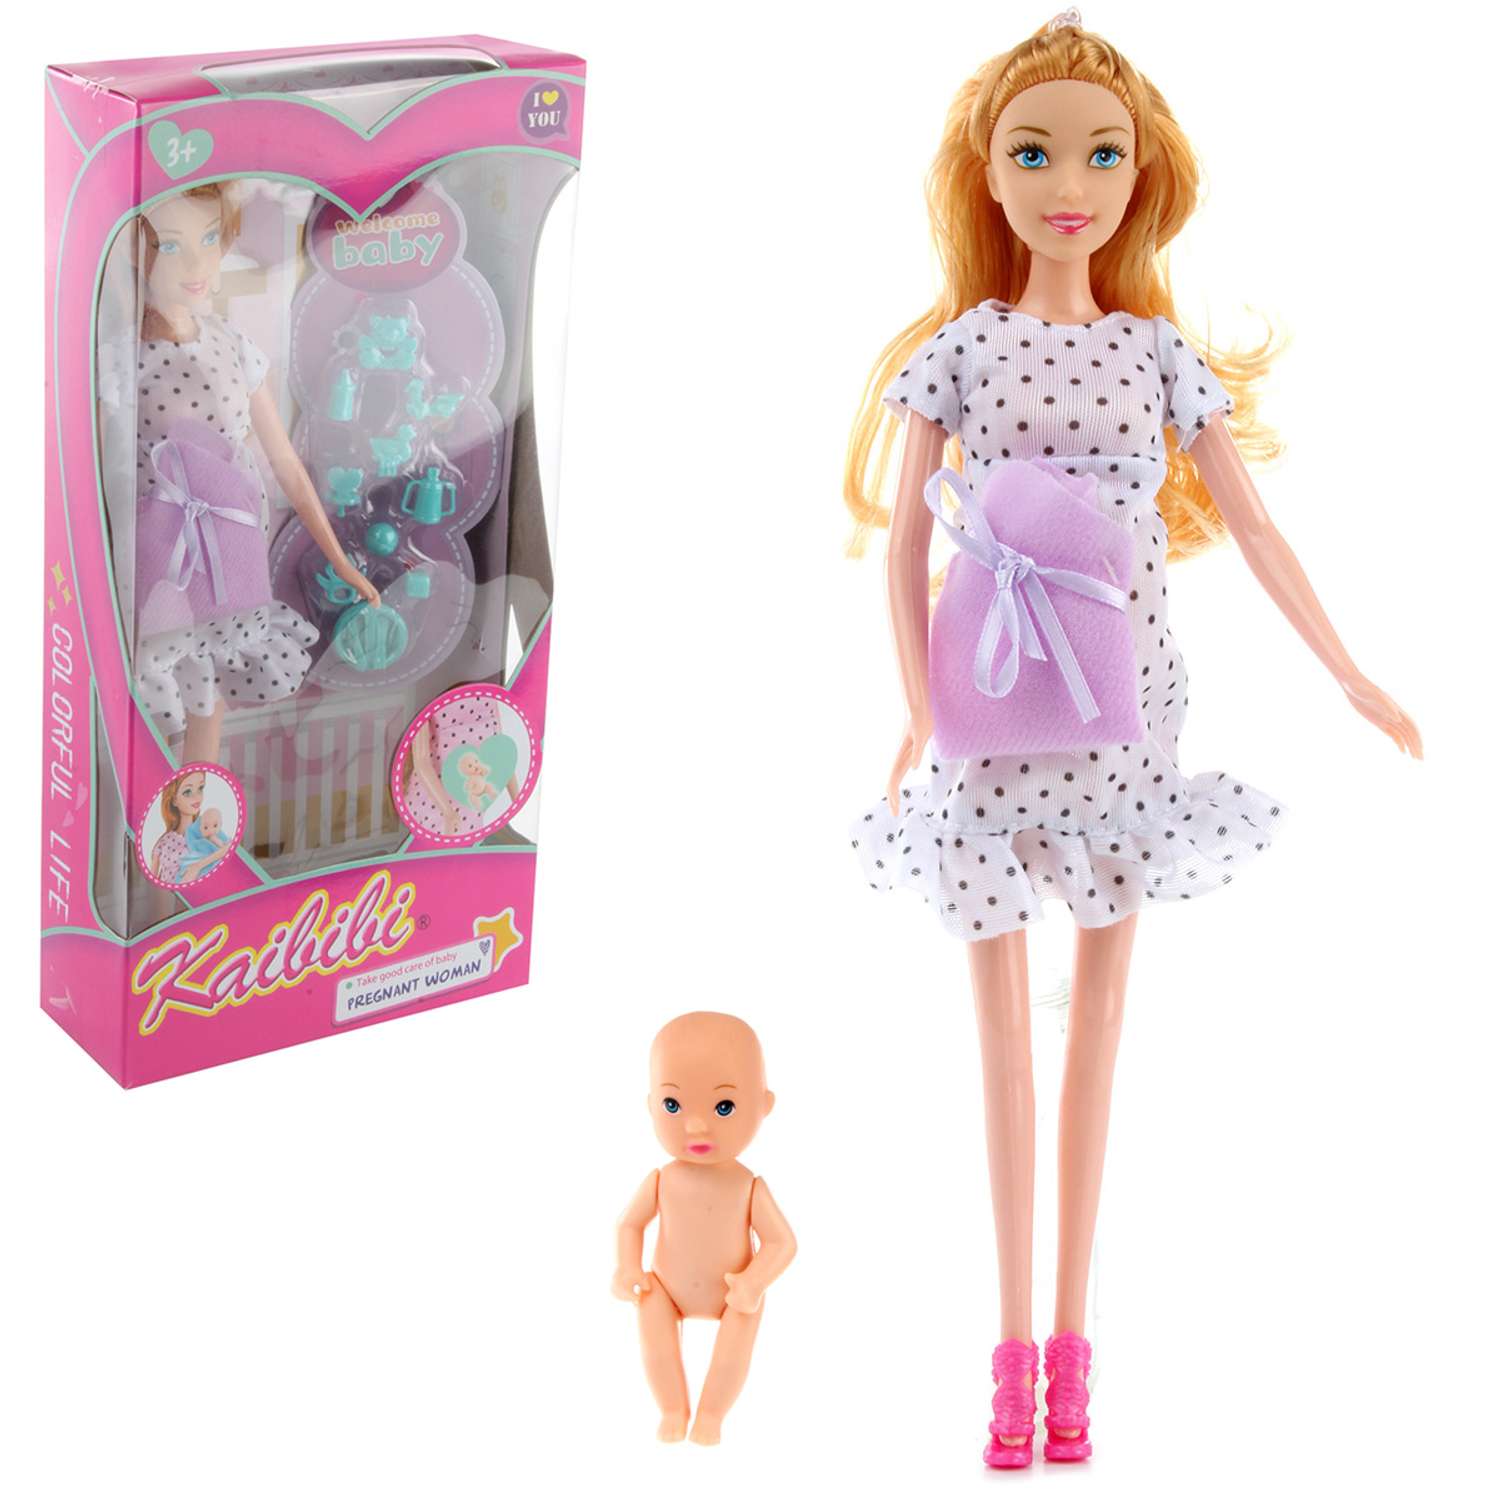 Кукла модель Барби Veld Co будущая мама с малышем 124763 - фото 2